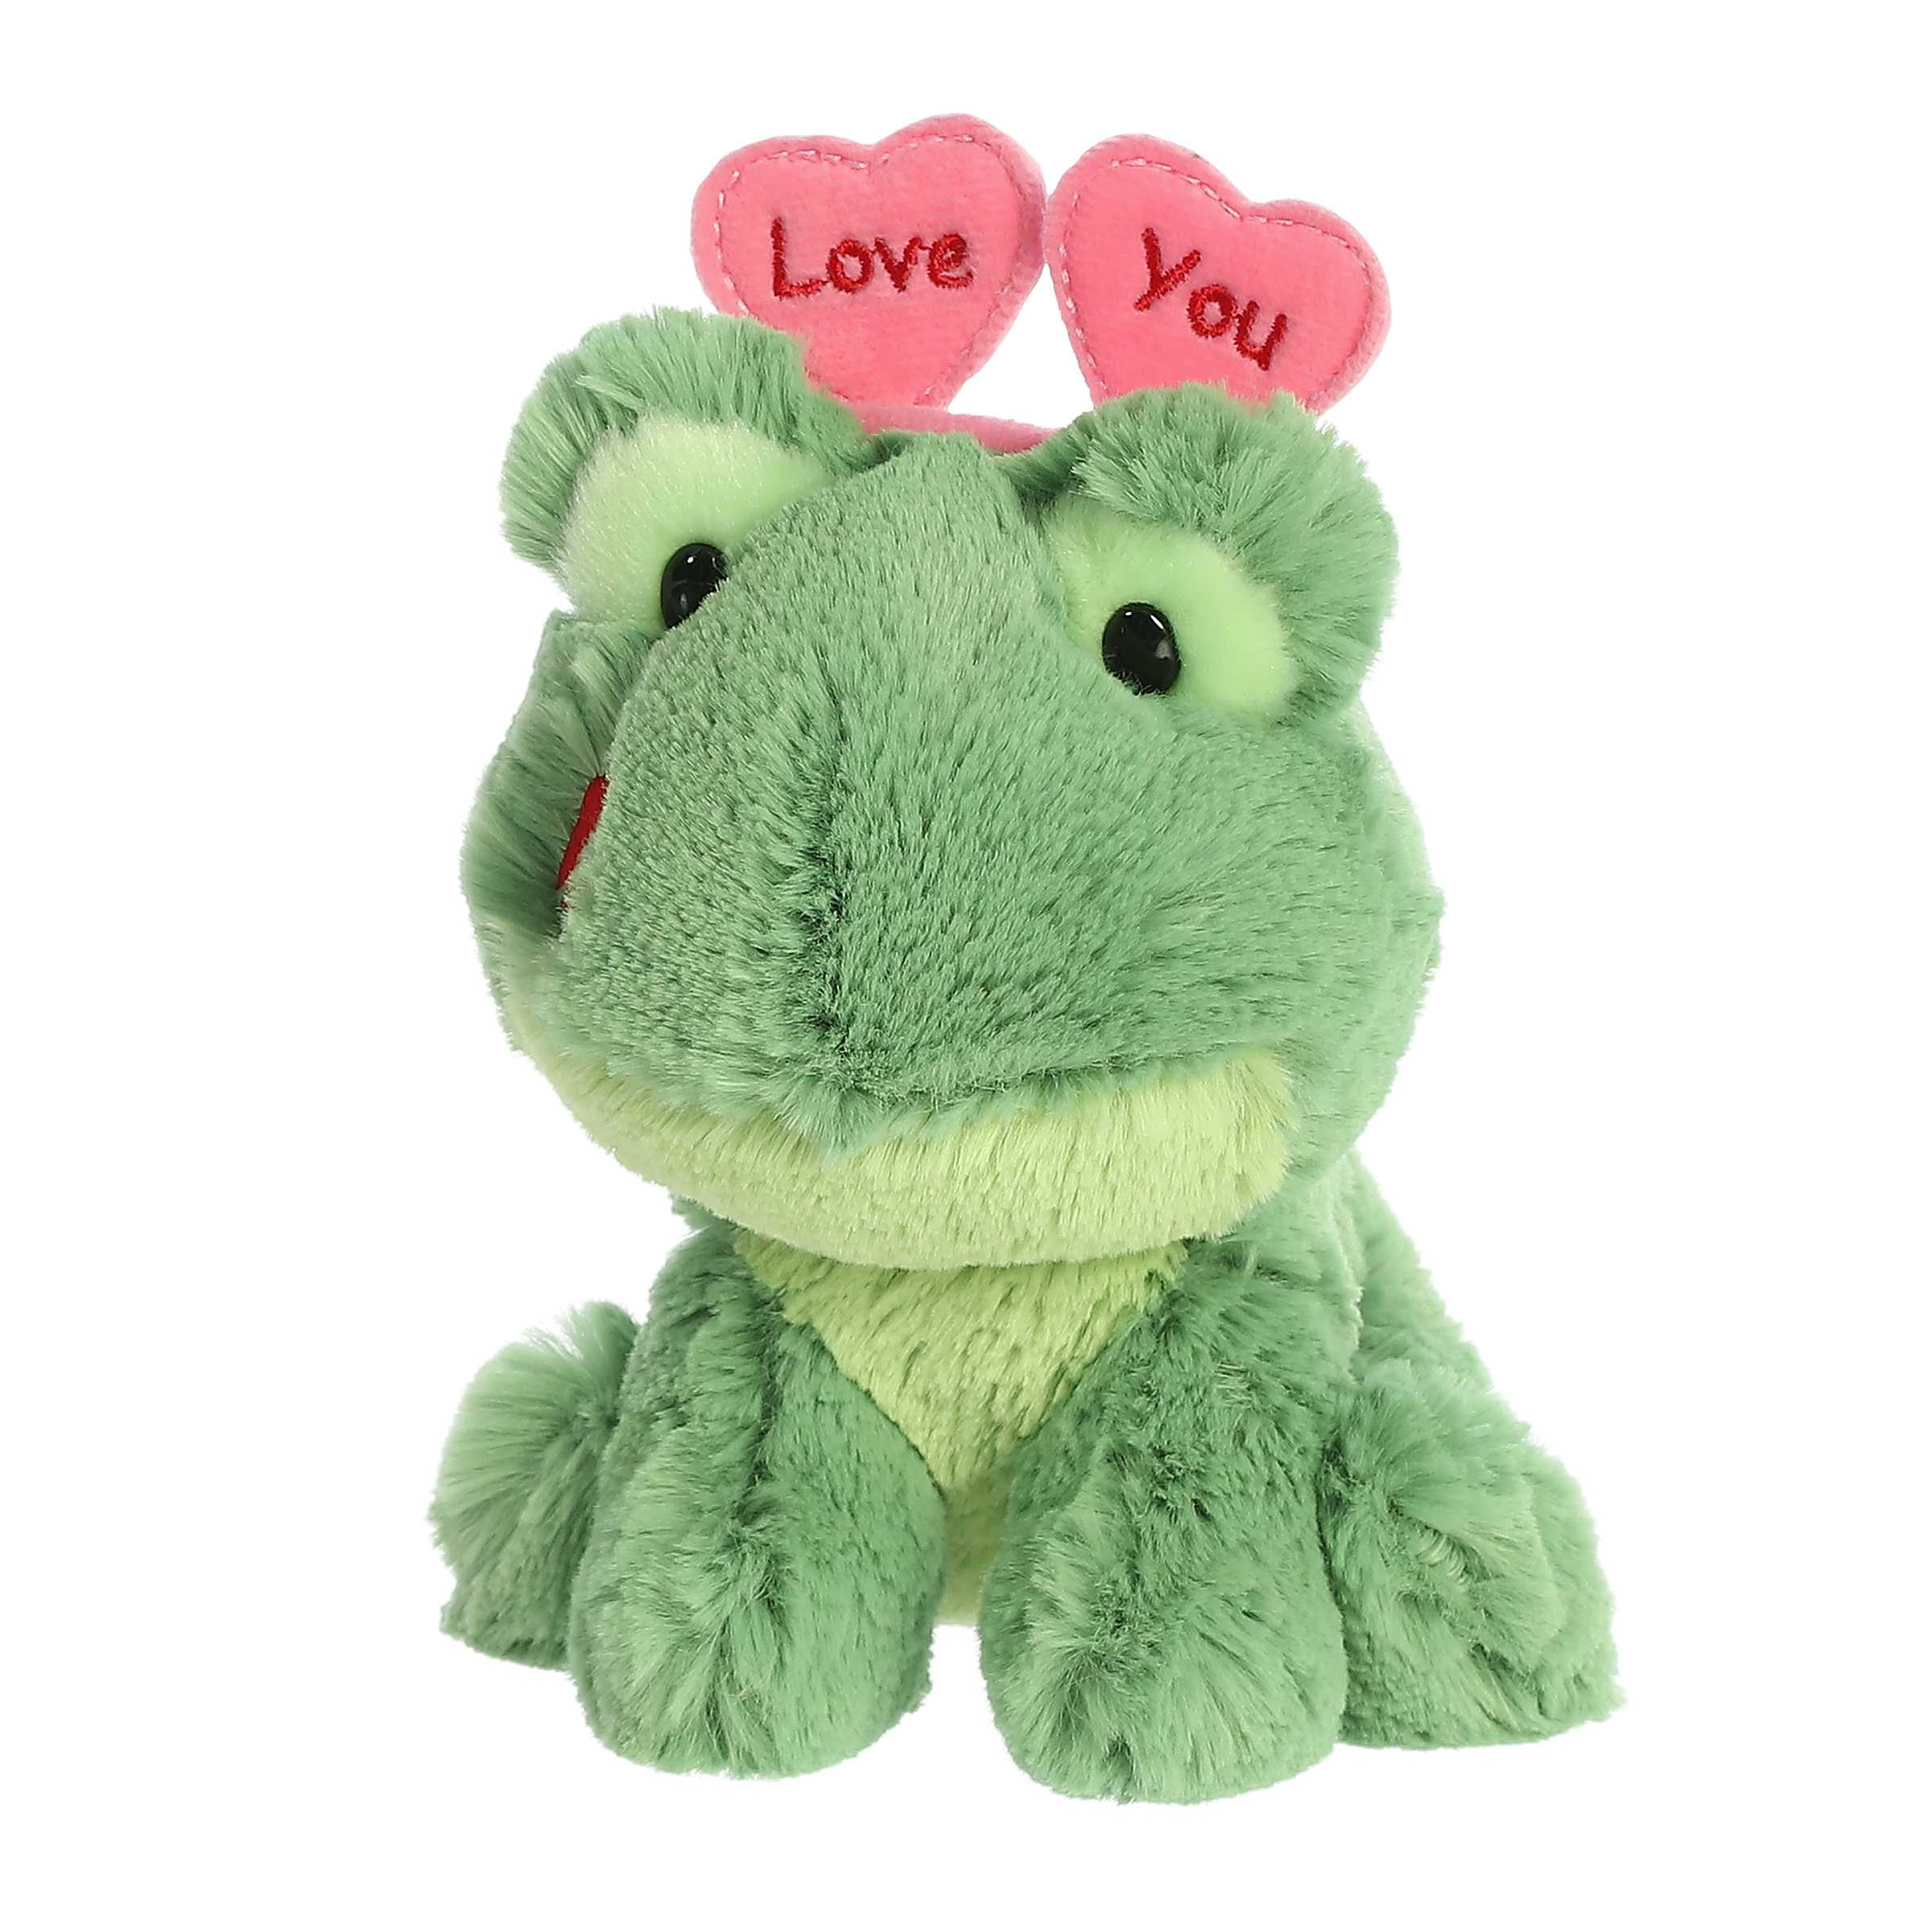 Aurora Small Green Love On The Mind 6 Love You Frog Heartwarming Stuffed Animal